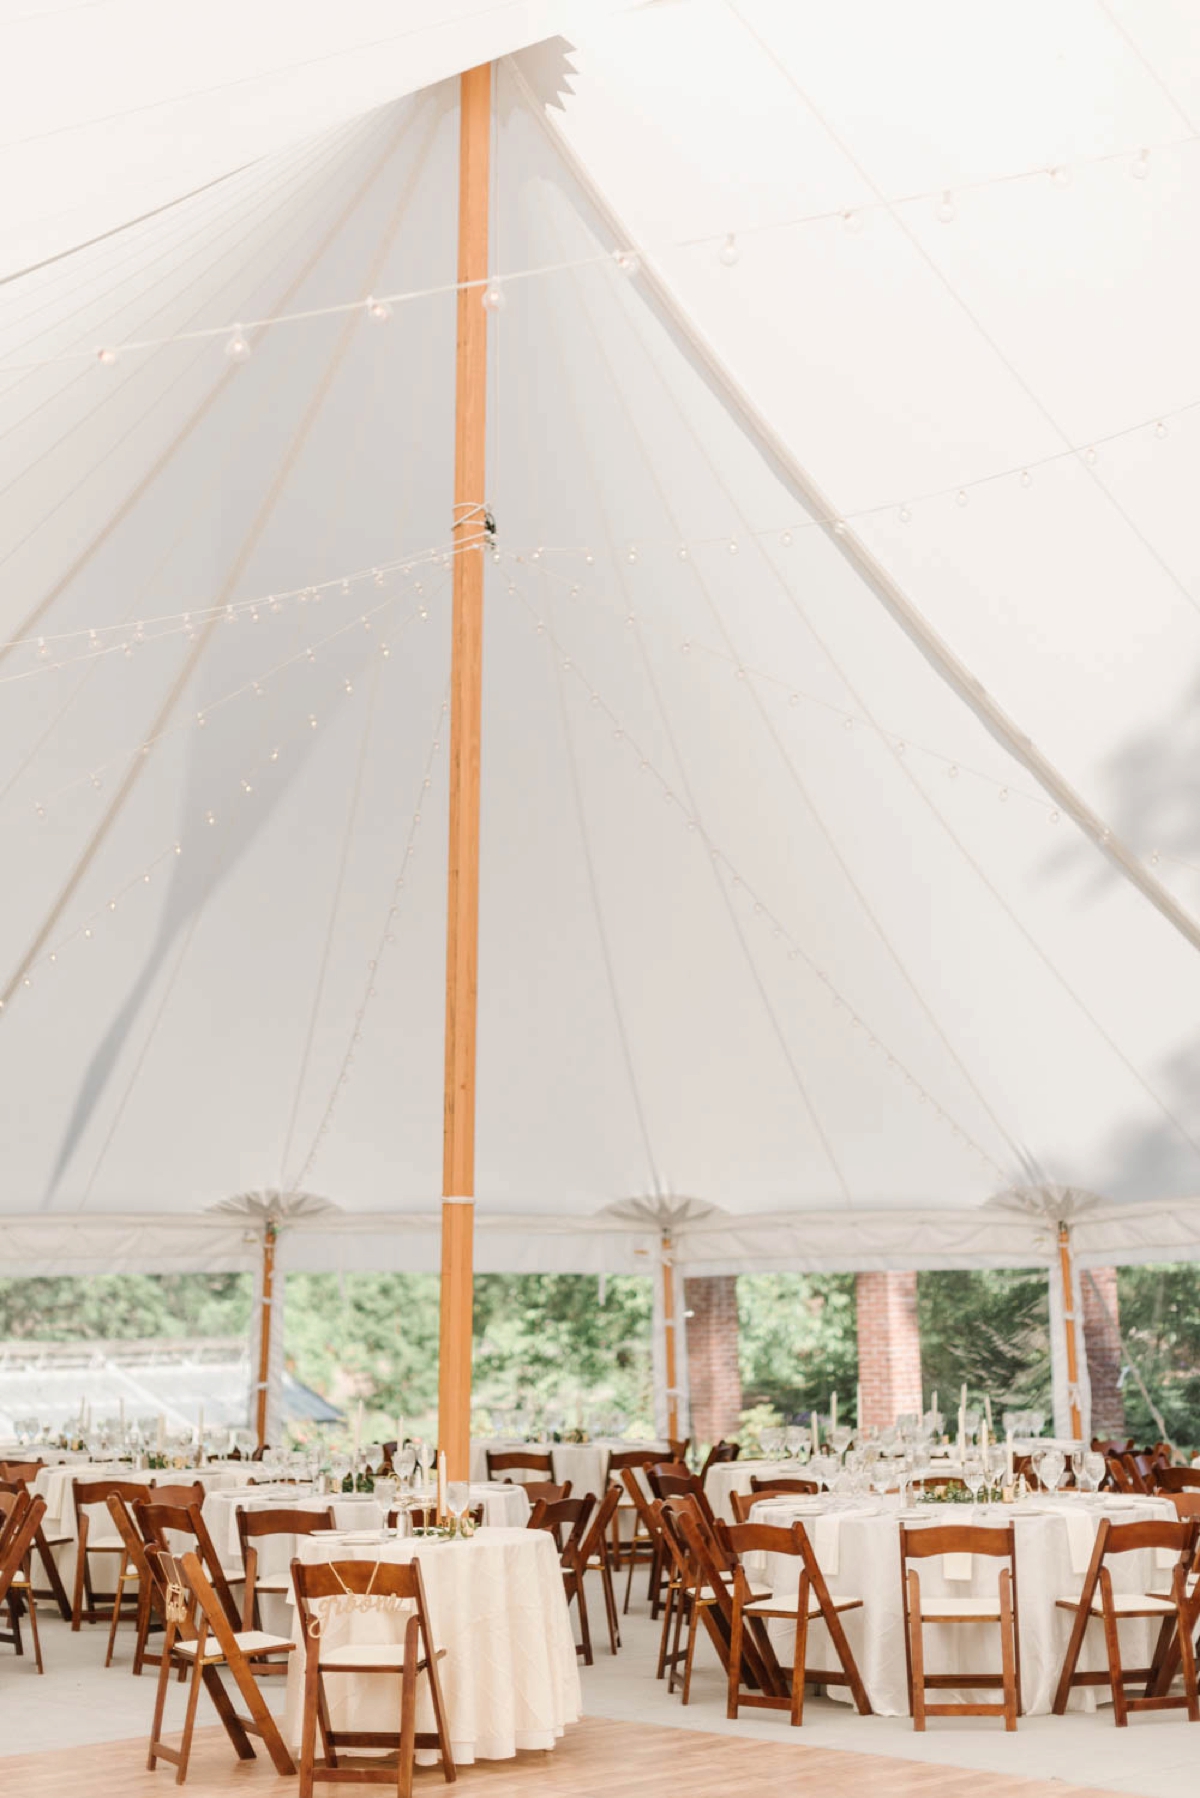 Garden Inspired Summer Wedding at Glen Magna Farms in Danvers, Massachusetts by Boston Wedding Photographer Annmarie Swift - Reception details in sail cloth tent 